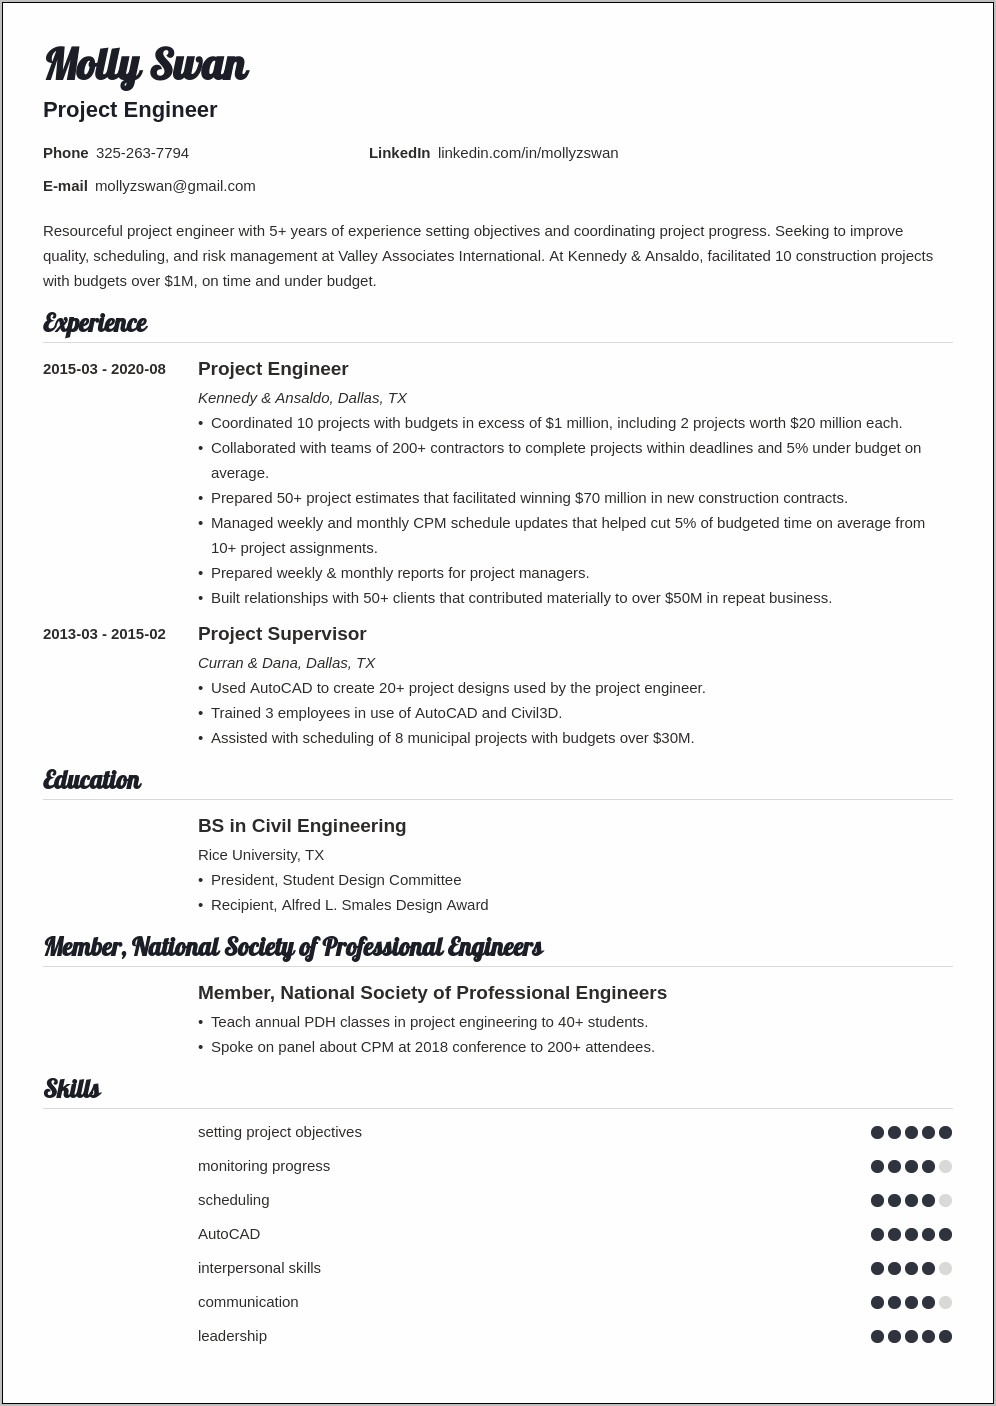 Project Engineer Job Description Resume